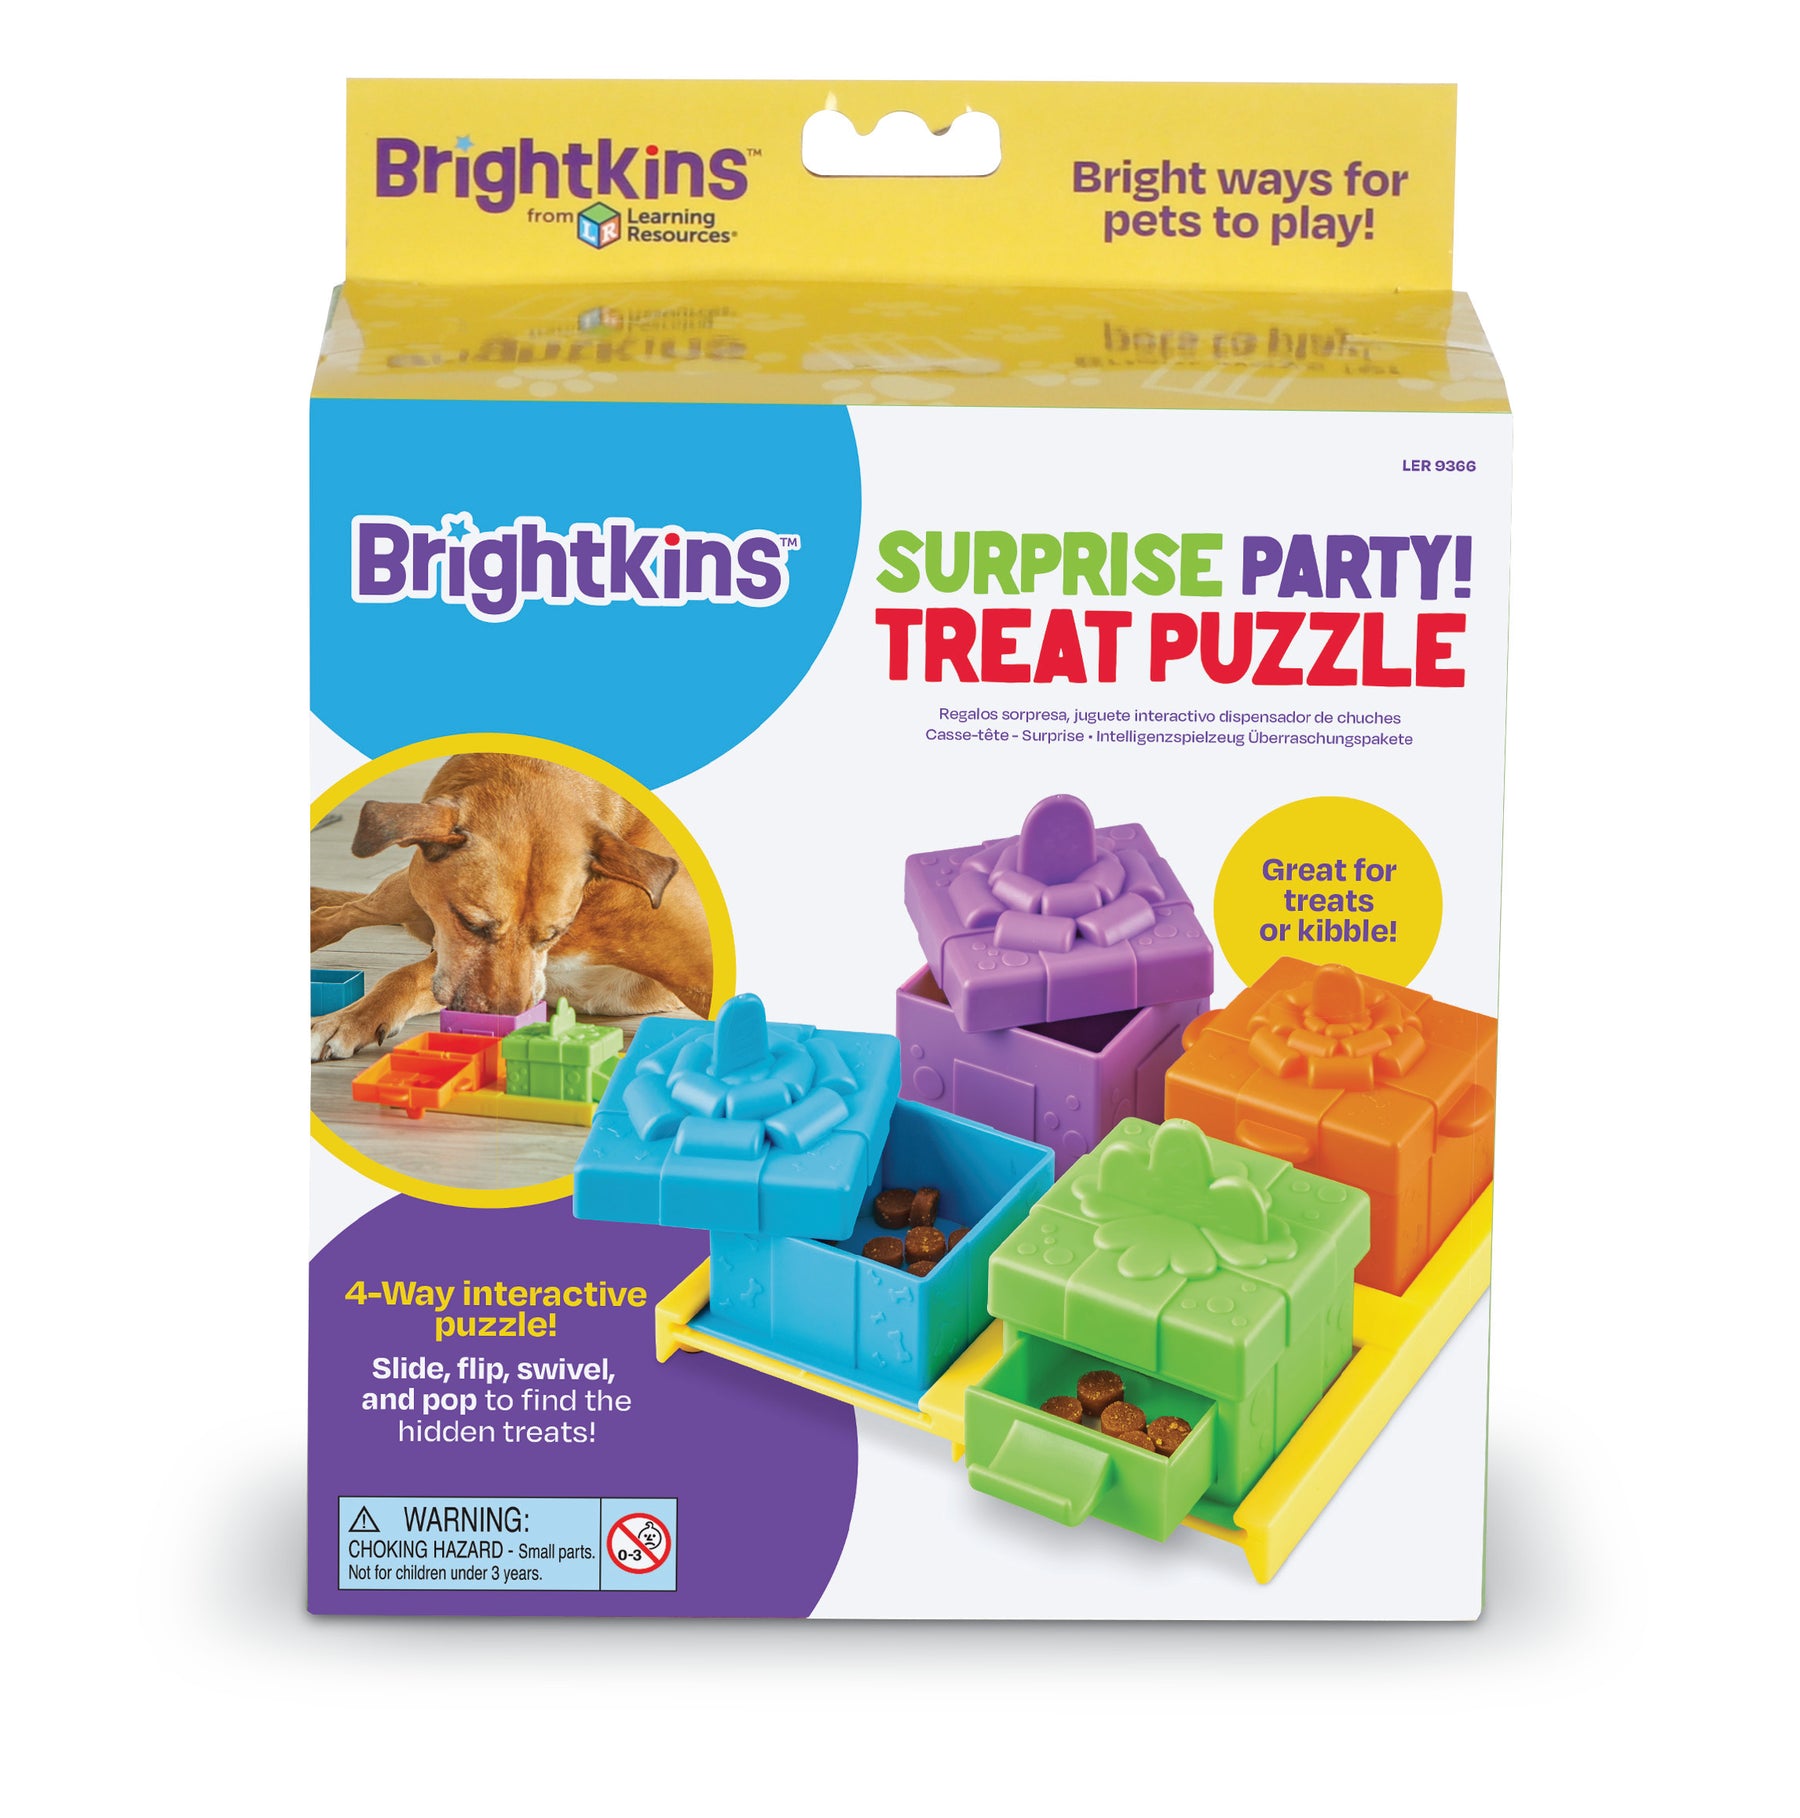 Brightkins Surprise Party! Treat Puzzle